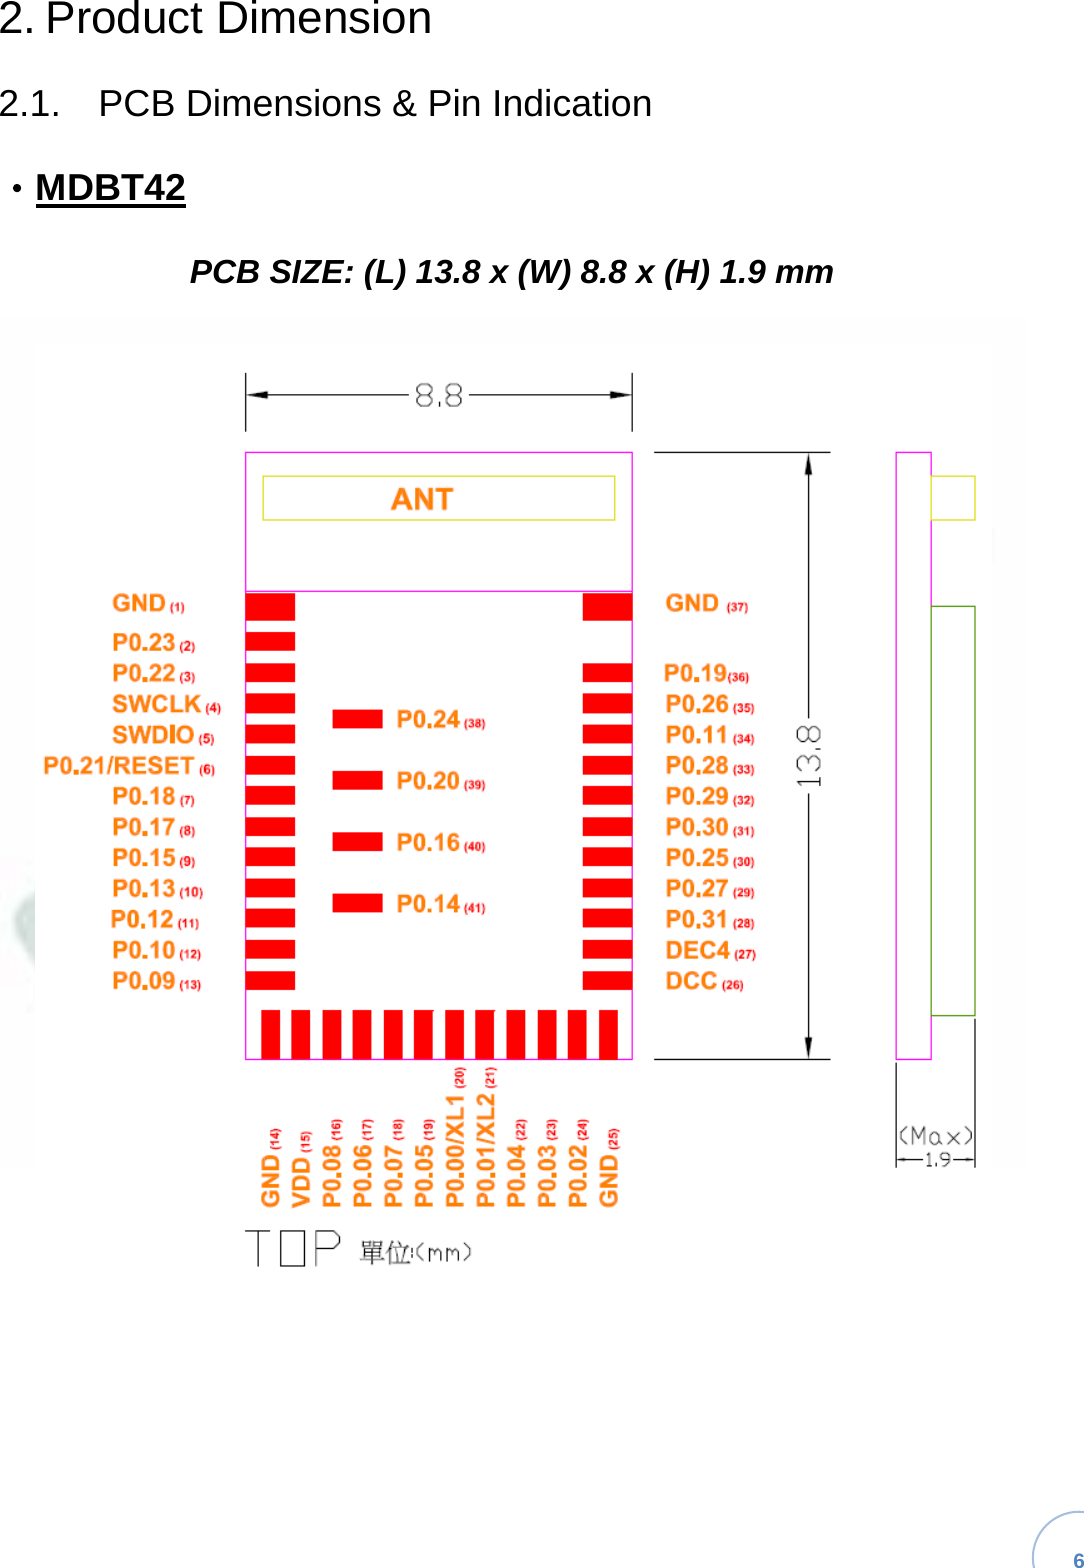   6 2. Product Dimension2.1.  PCB Dimensions &amp; Pin Indication•MDBT42PCB SIZE: (L) 13.8 x (W) 8.8 x (H) 1.9 mm